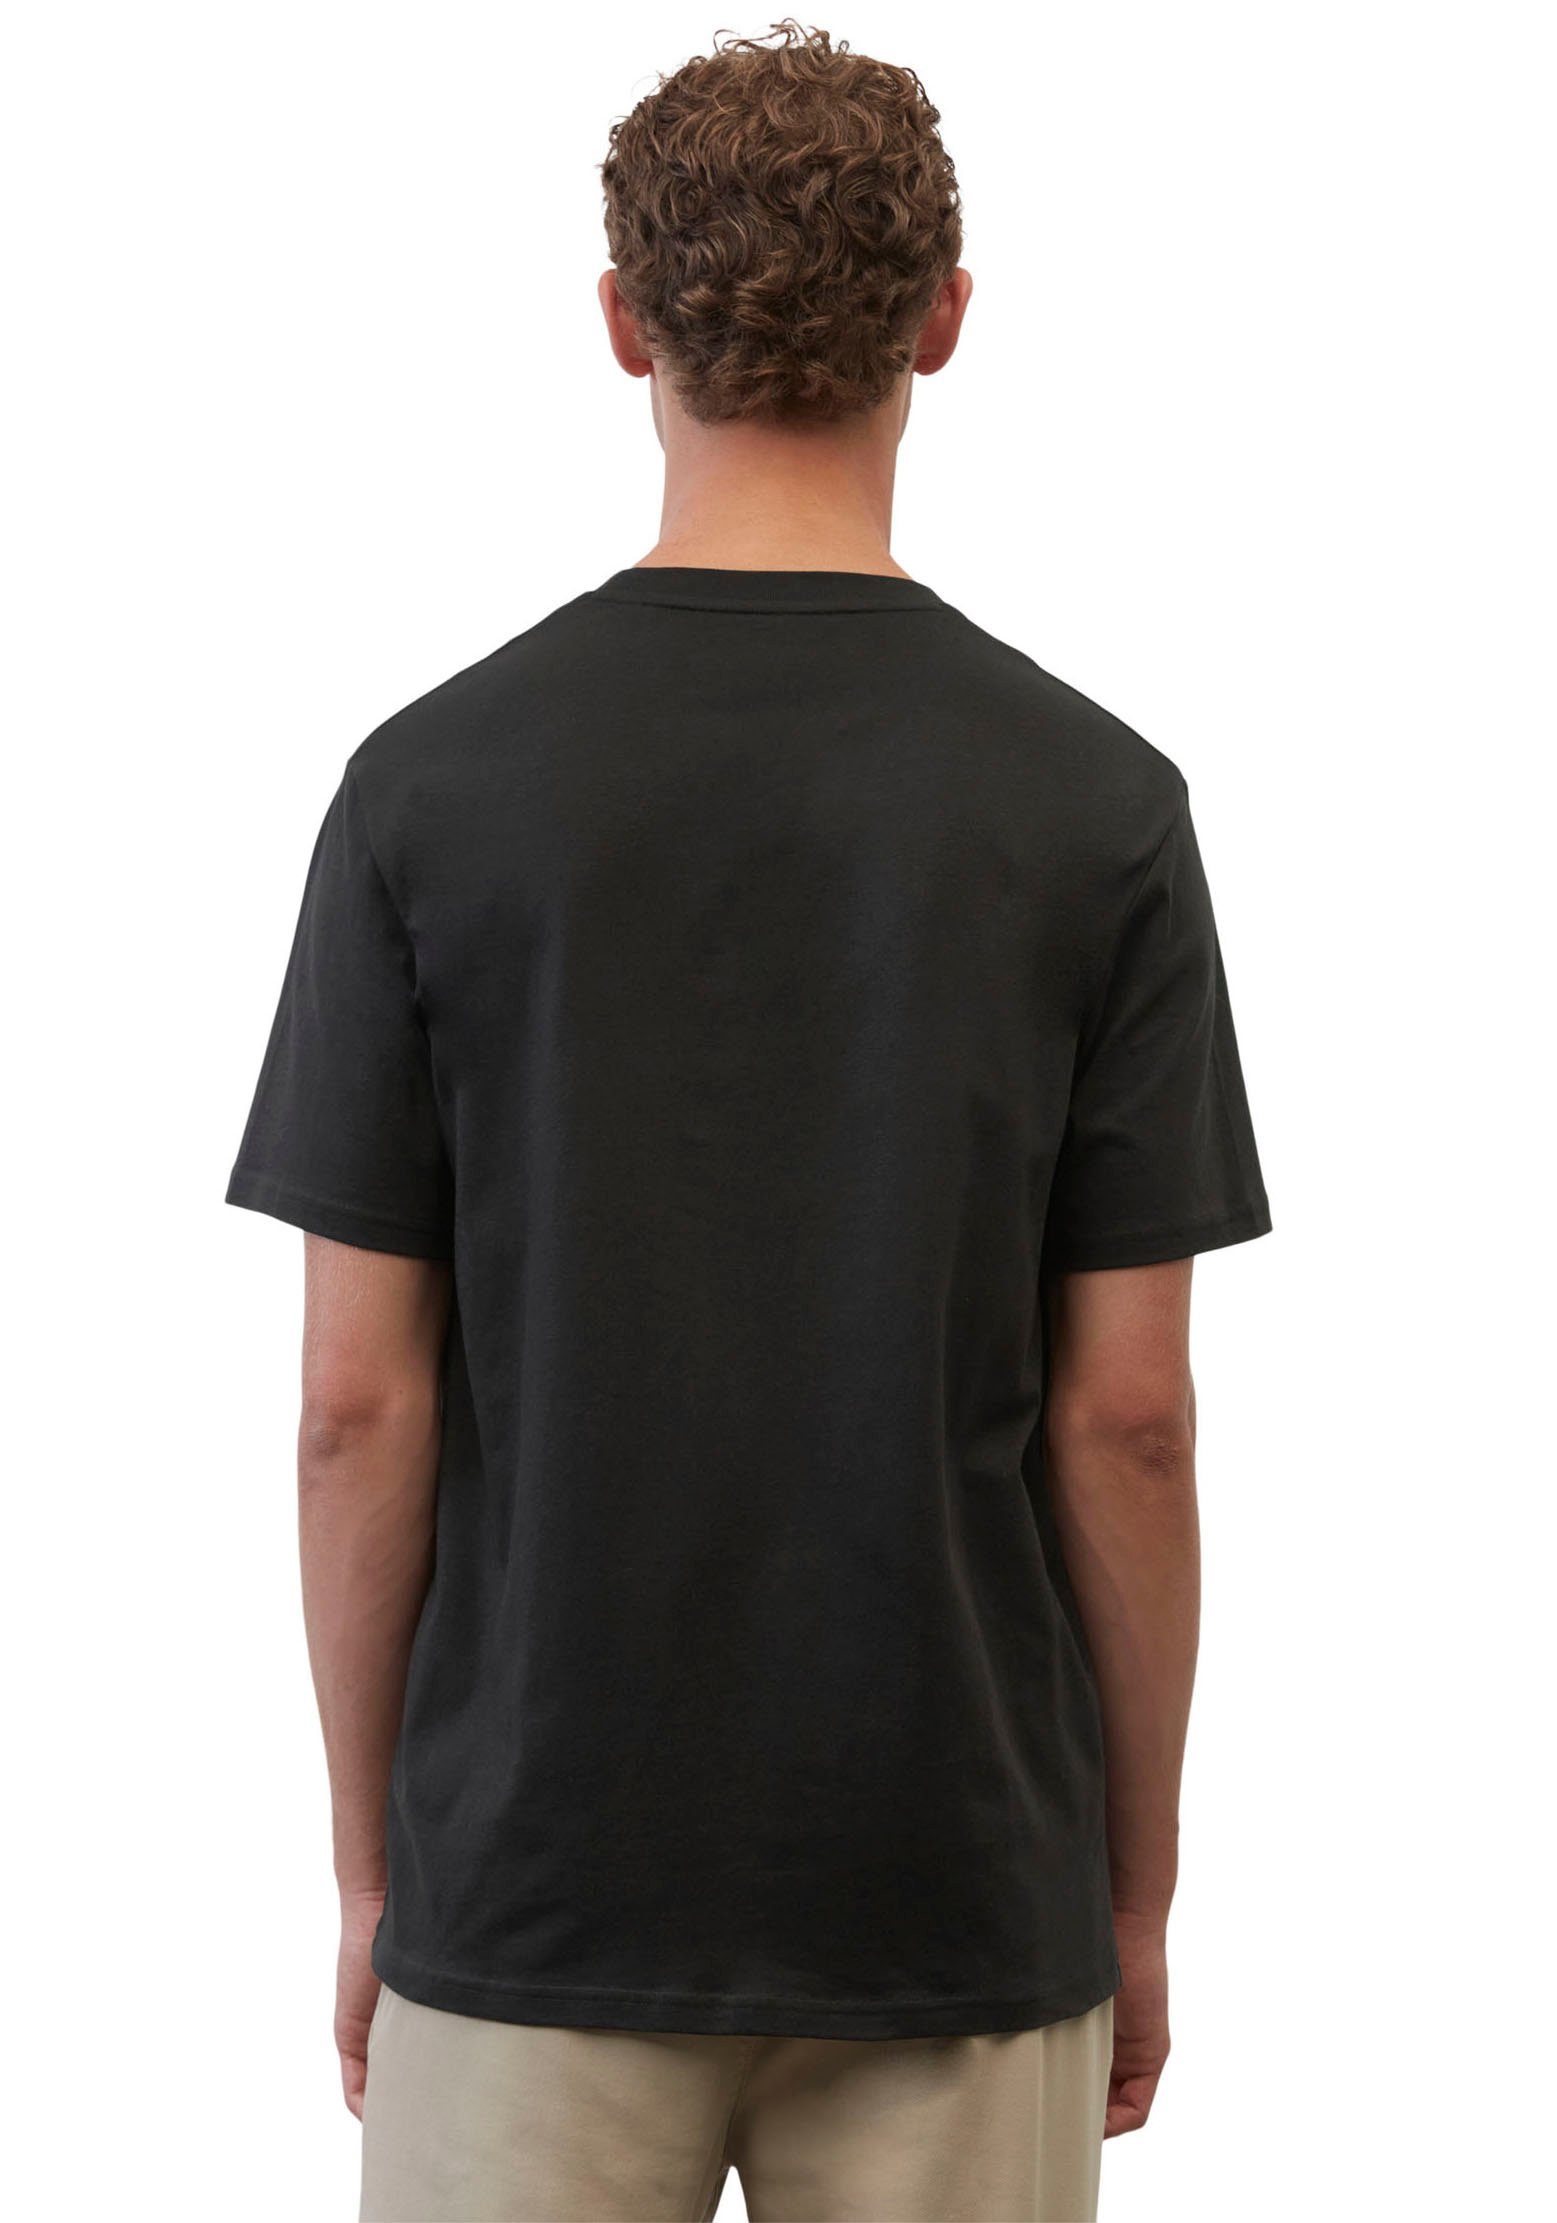 T-Shirt klassisches schwarz O'Polo Marc Logo-T-Shirt